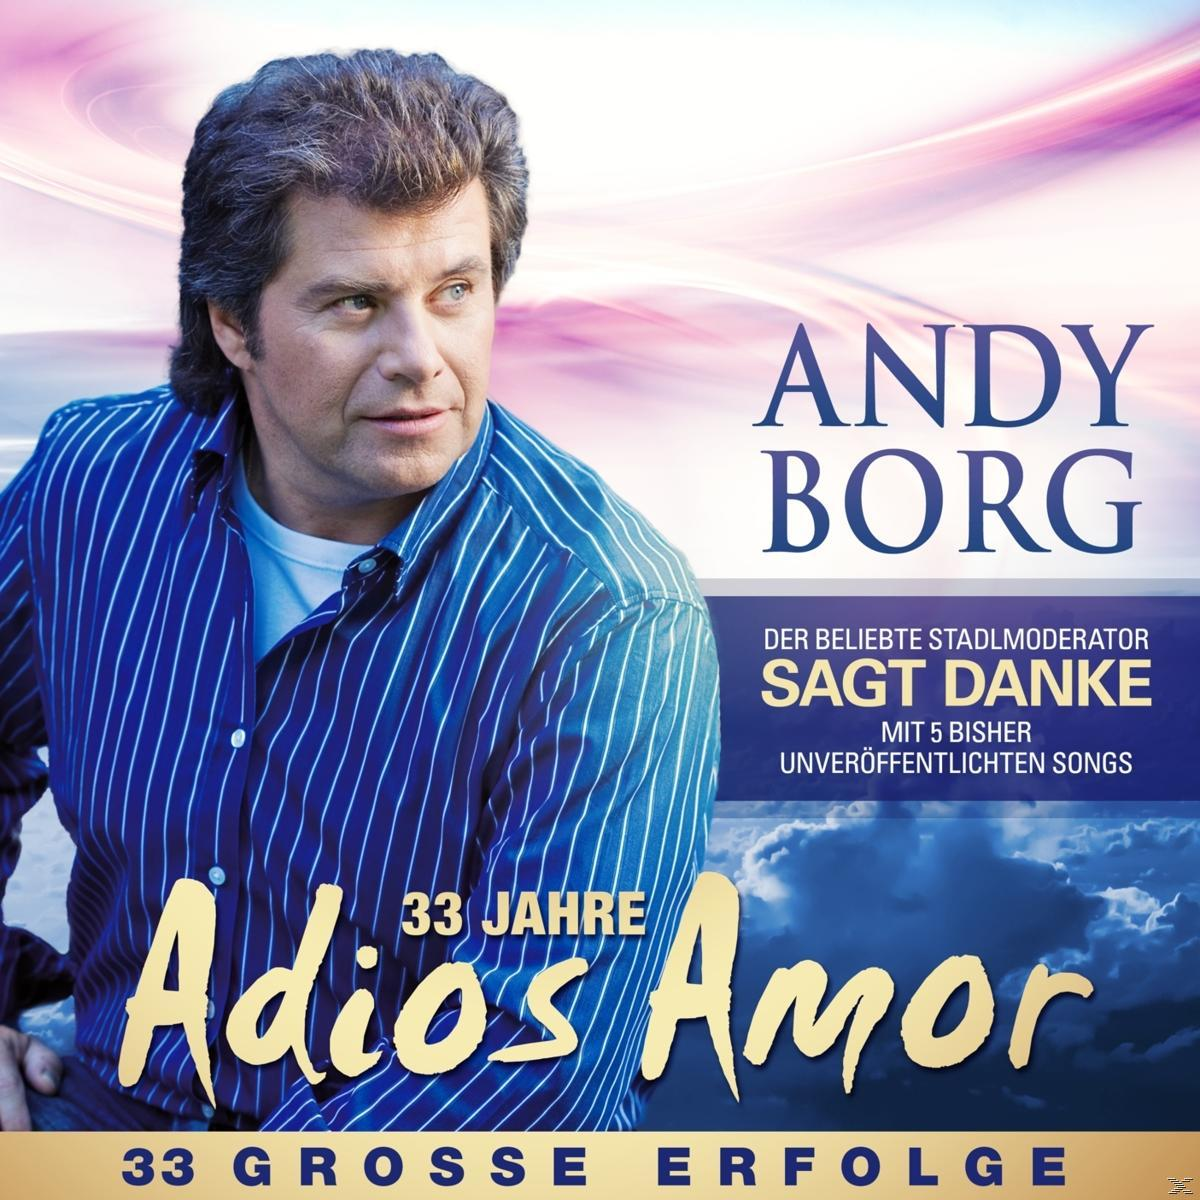 Andy Borg - Adios Amor-Große - (CD) Erfolge